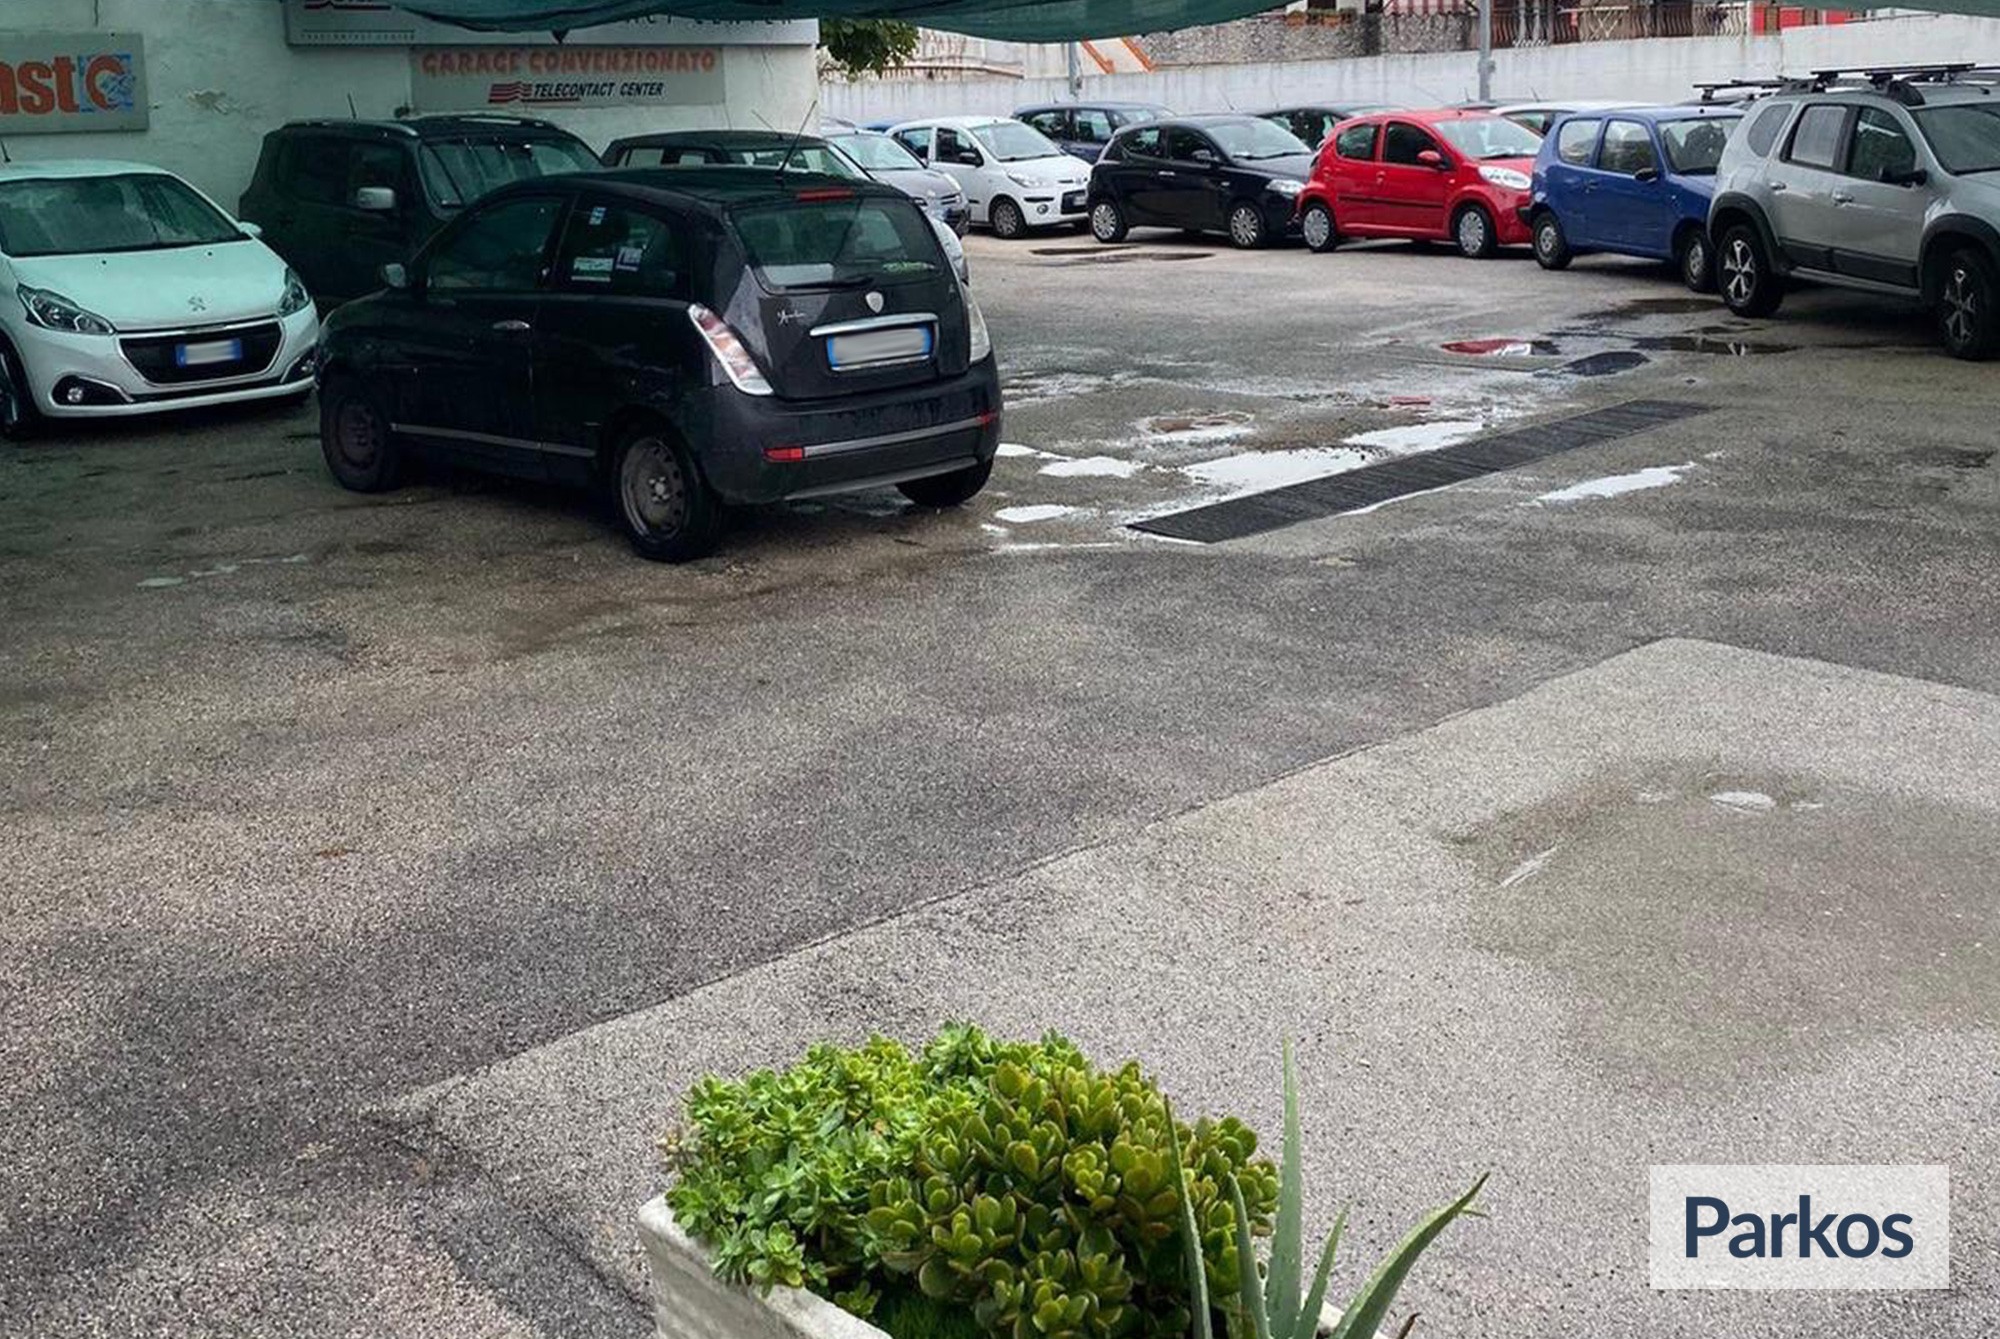 Parking Vasto 2 (Paga online) - Parcheggio Aeroporto Napoli - picture 1